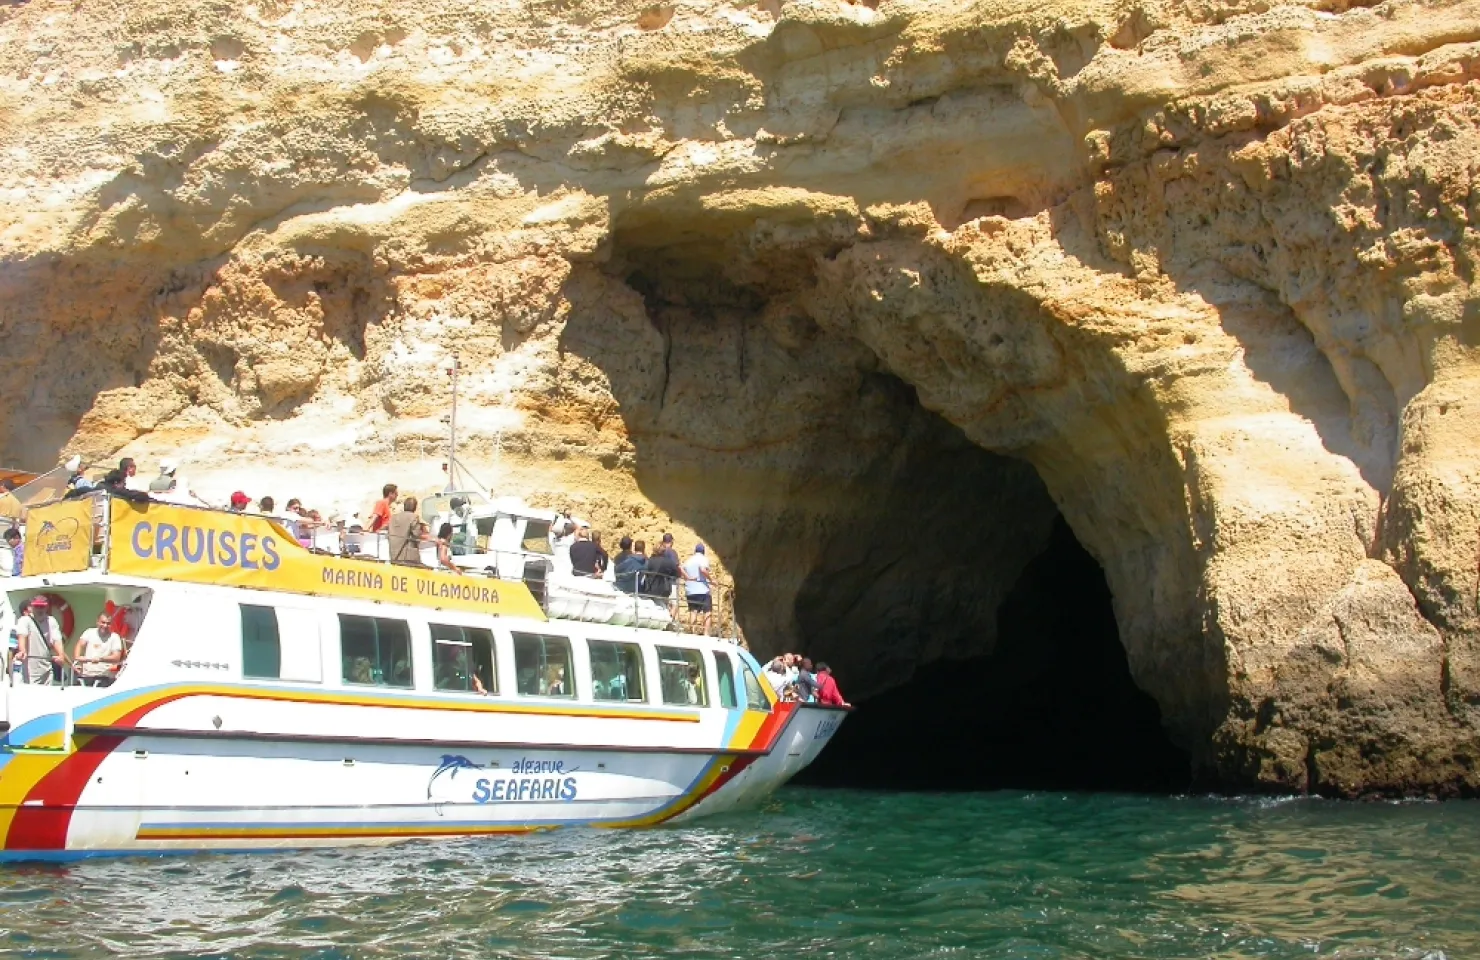 Algarve Sea Cave Tour - Vilamoura Activities Algarve